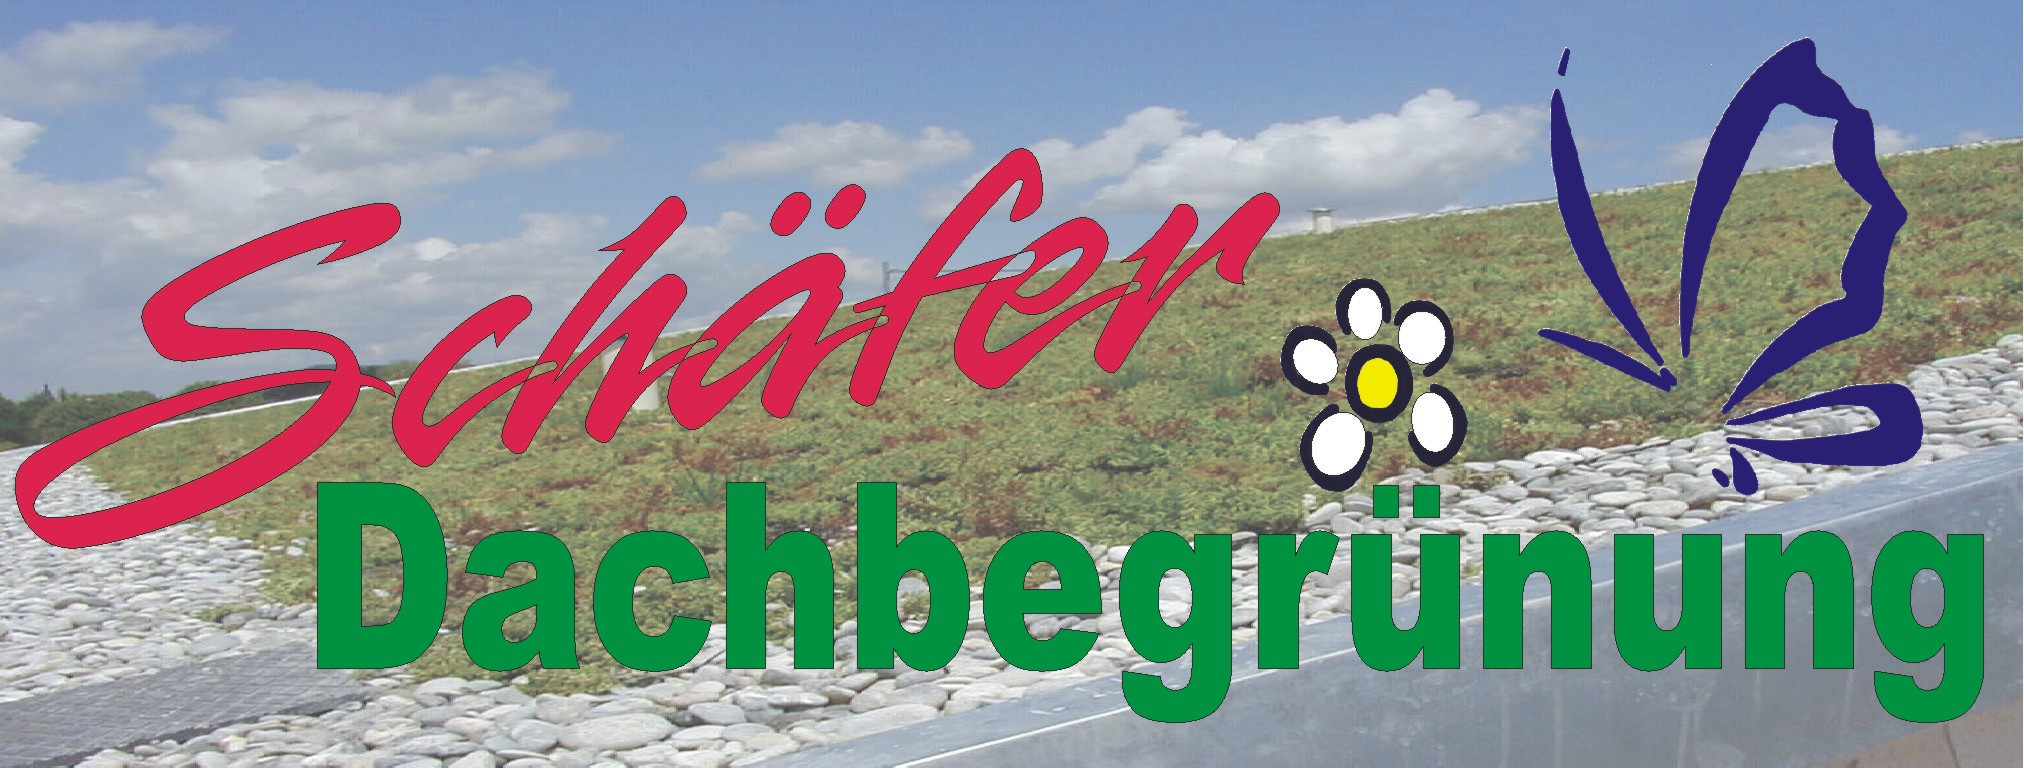 (c) Schaefer-info.de